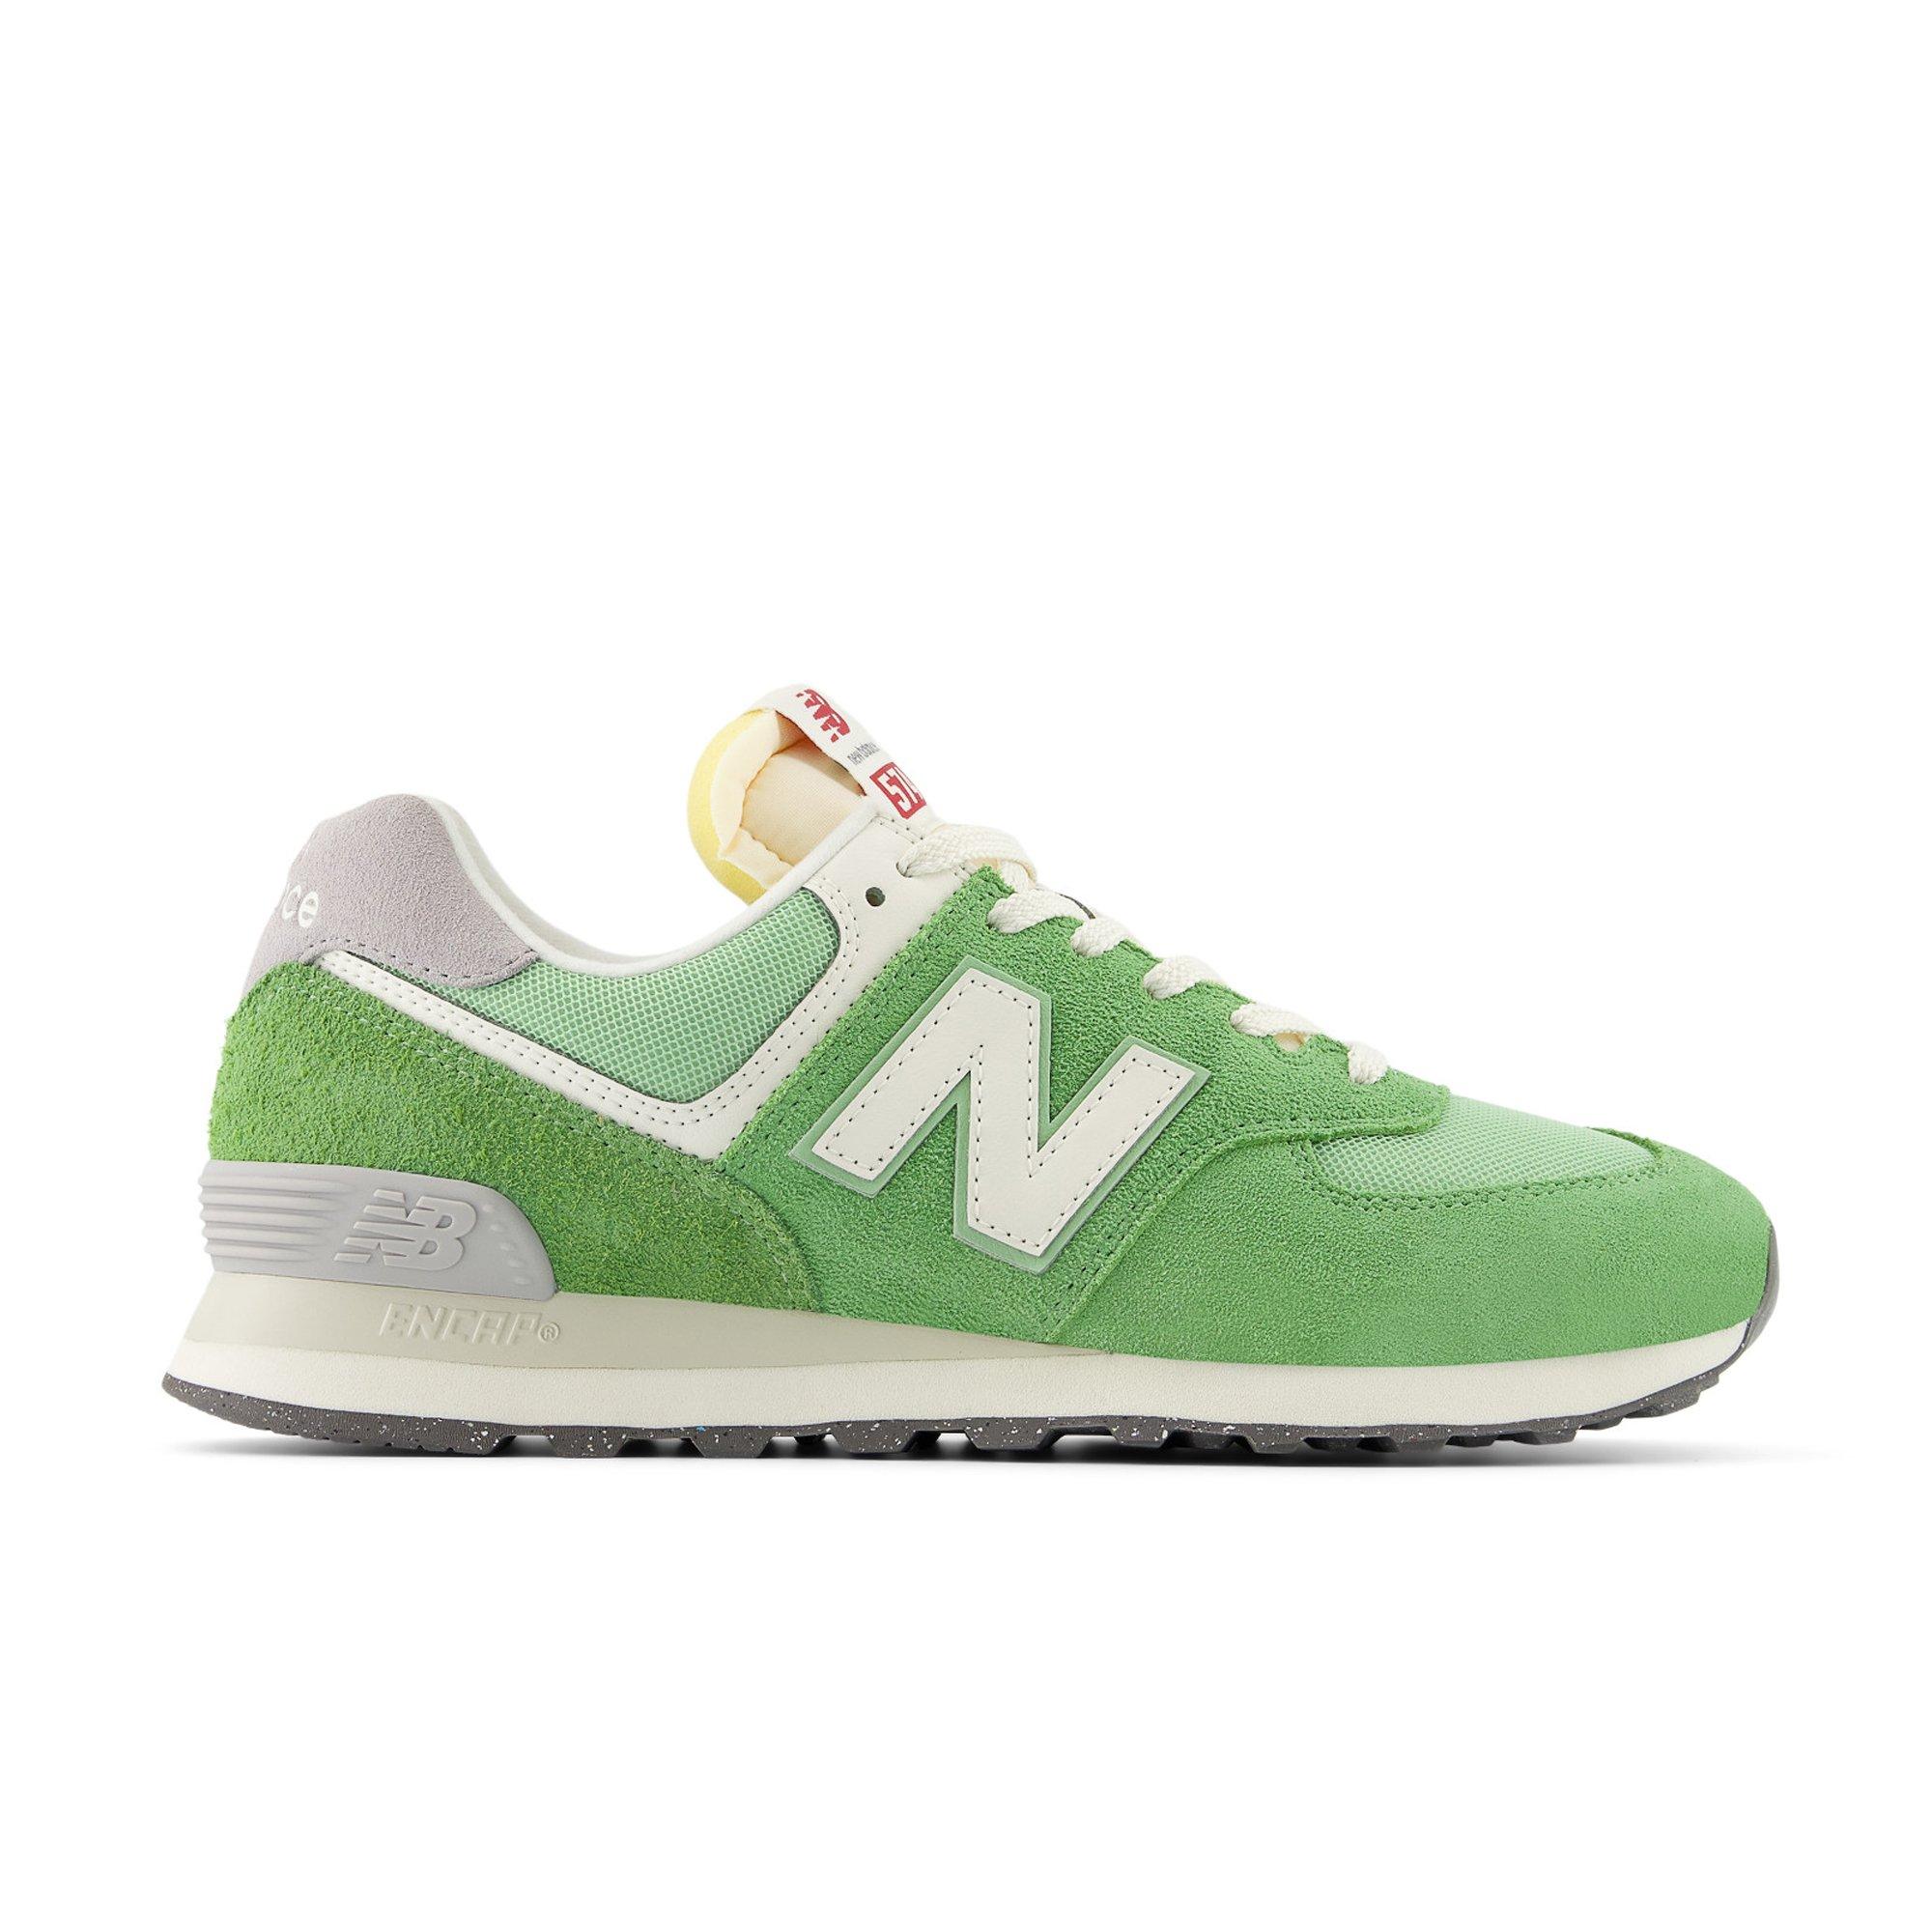 New Balance 574 "Alpine Green/White" Unisex Shoe